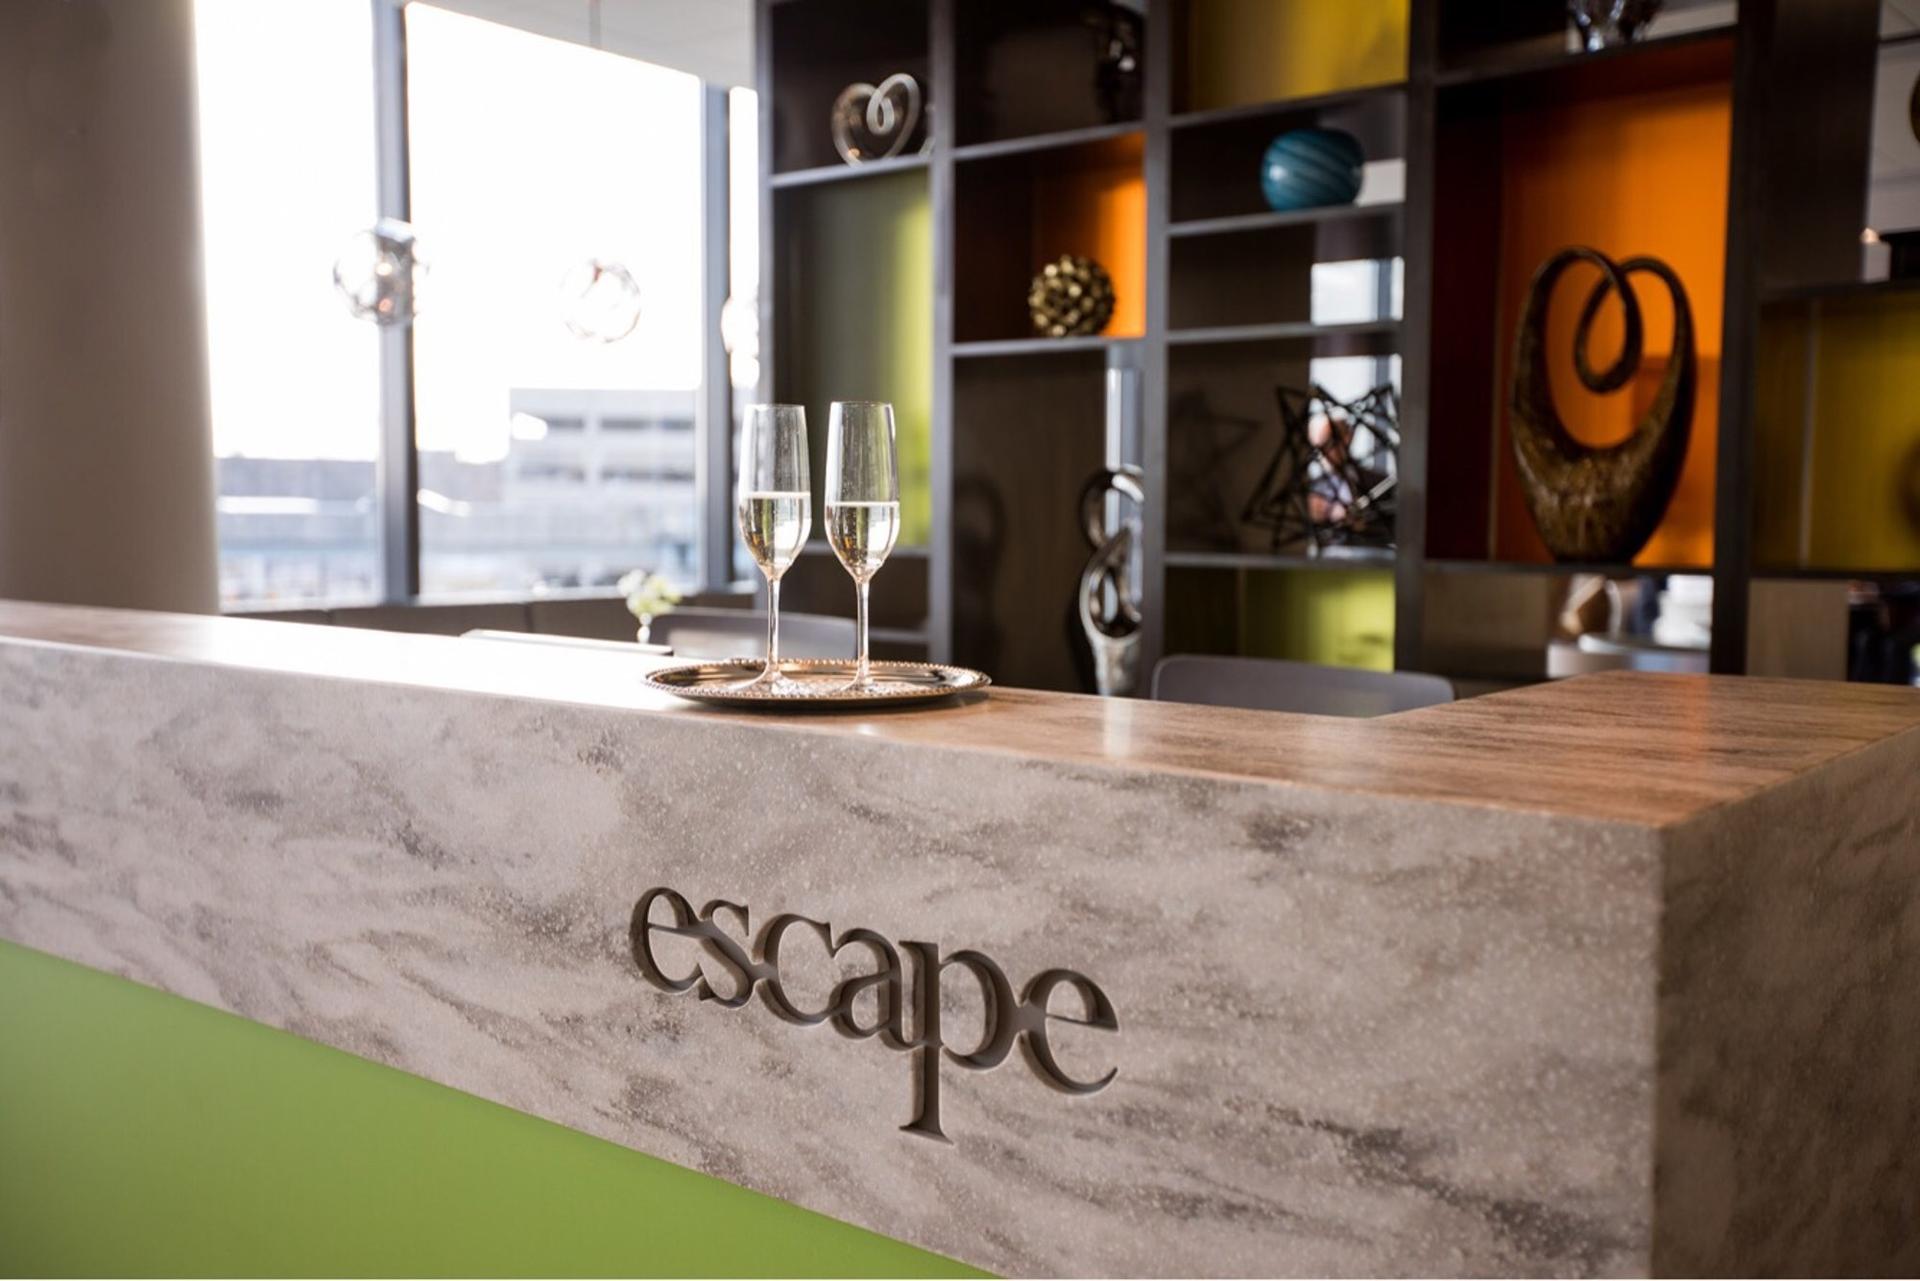 Escape Lounge image 8 of 53